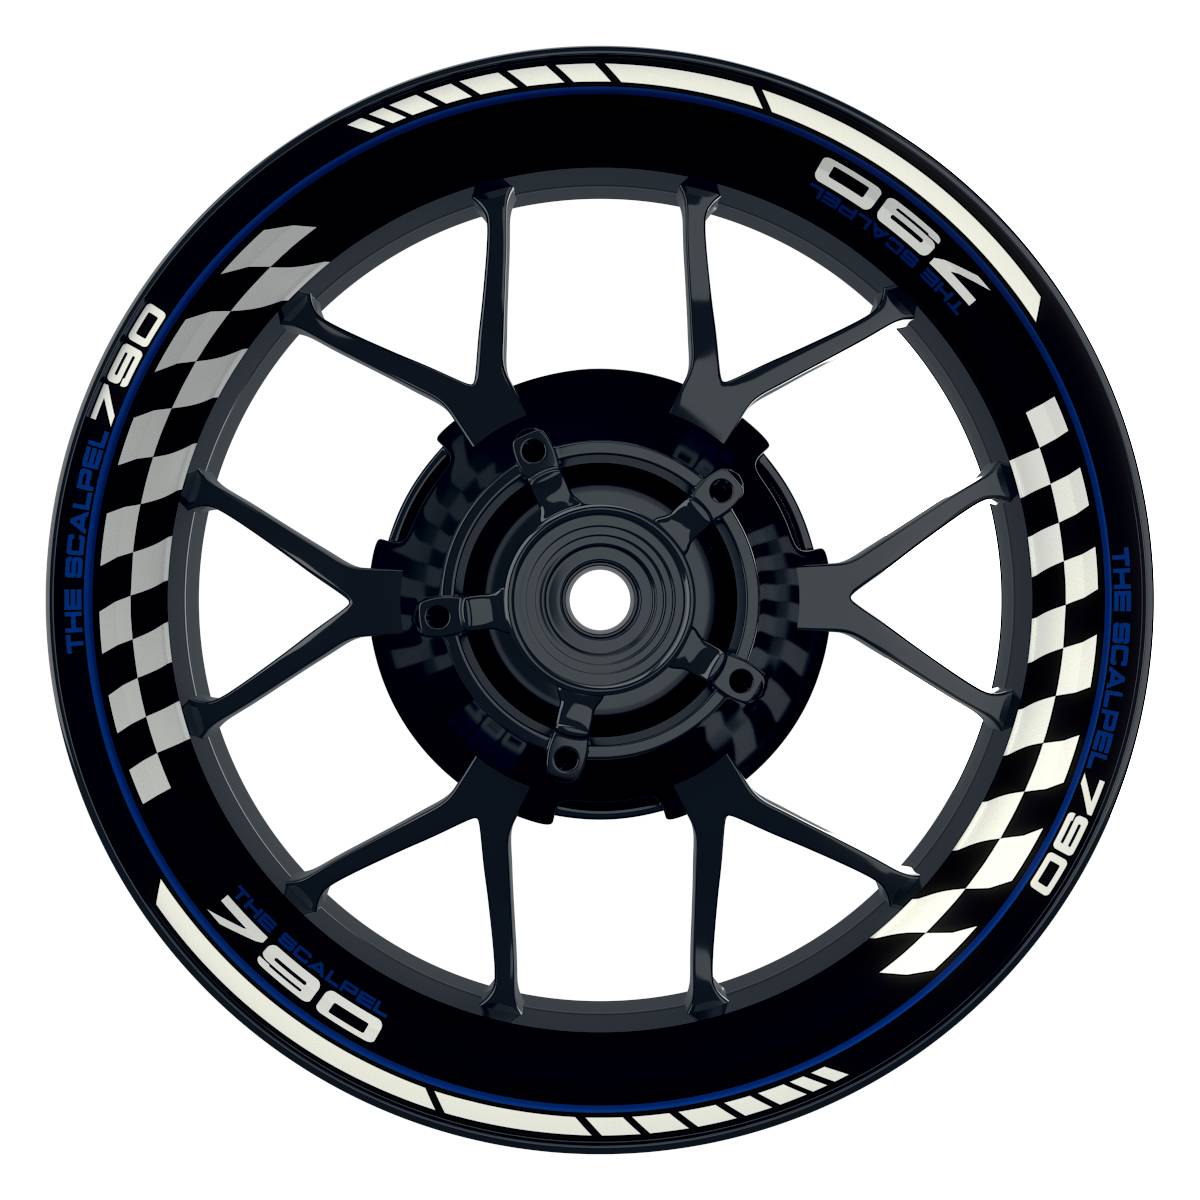 THE SCALPEL 790 Grid schwarz blau Wheelsticker Felgenaufkleber